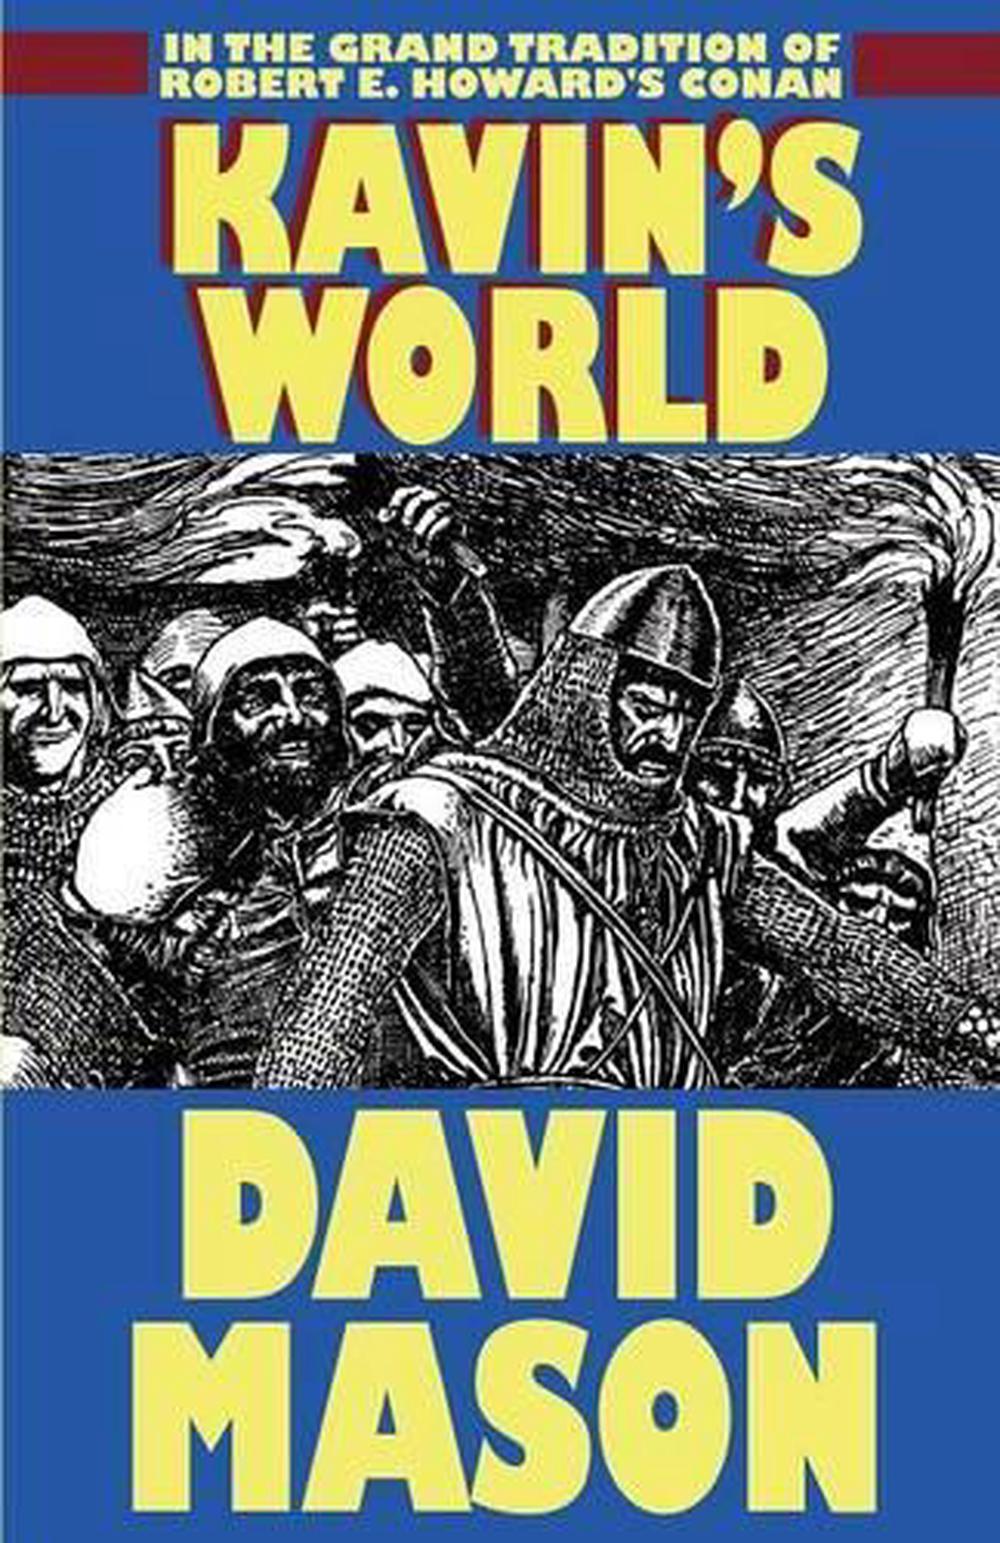 Kavin's World by David Mason (English) Paperback Book Free Shipping